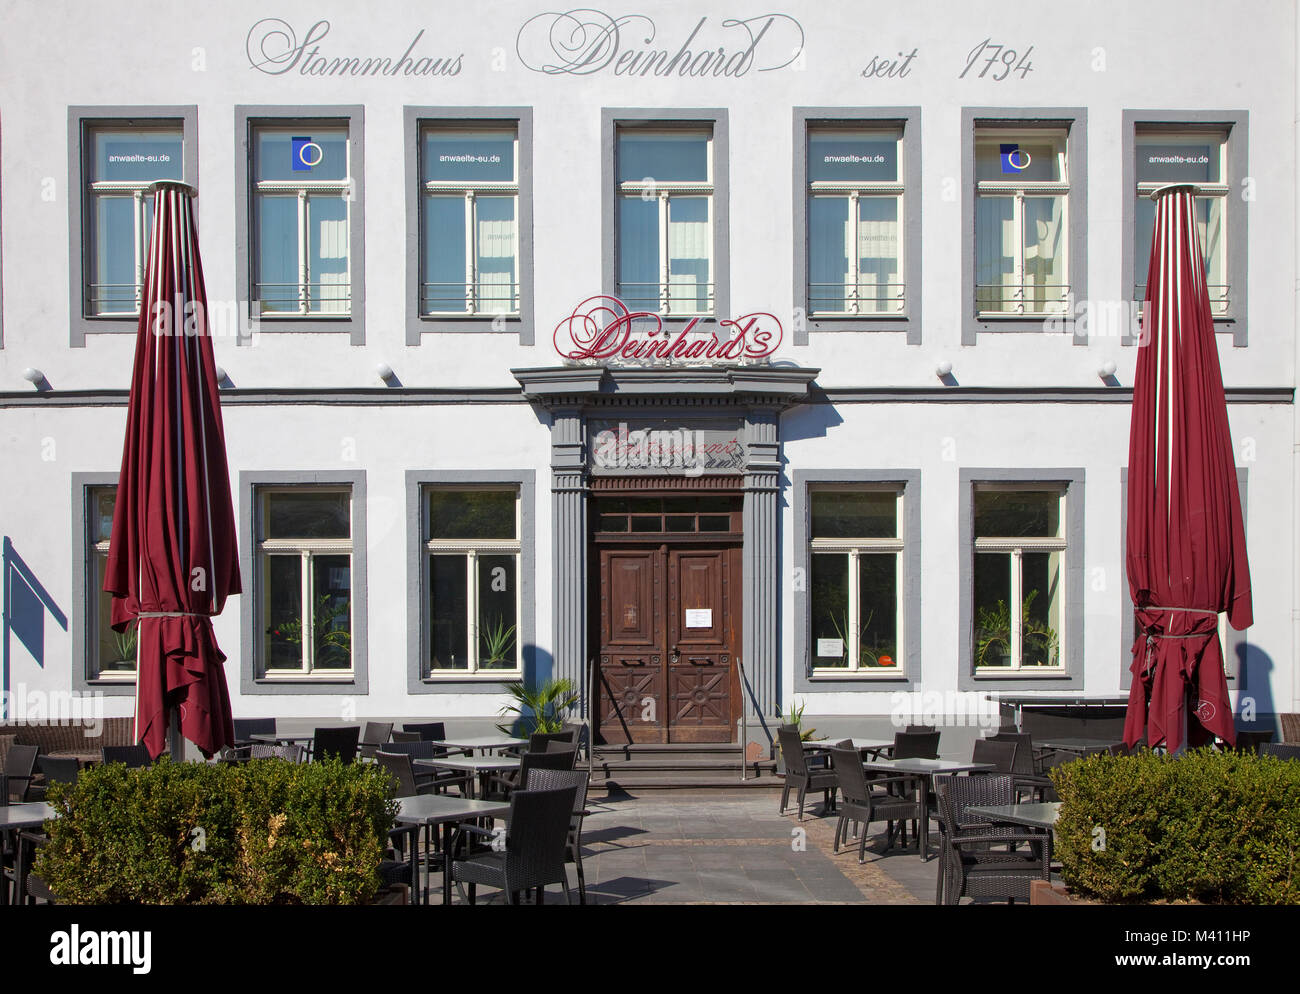 Deinhard building, since 1794 producer of sparkling wine, old town of Koblenz, Rhineland-Palatinate, Germany, Europe Stock Photo